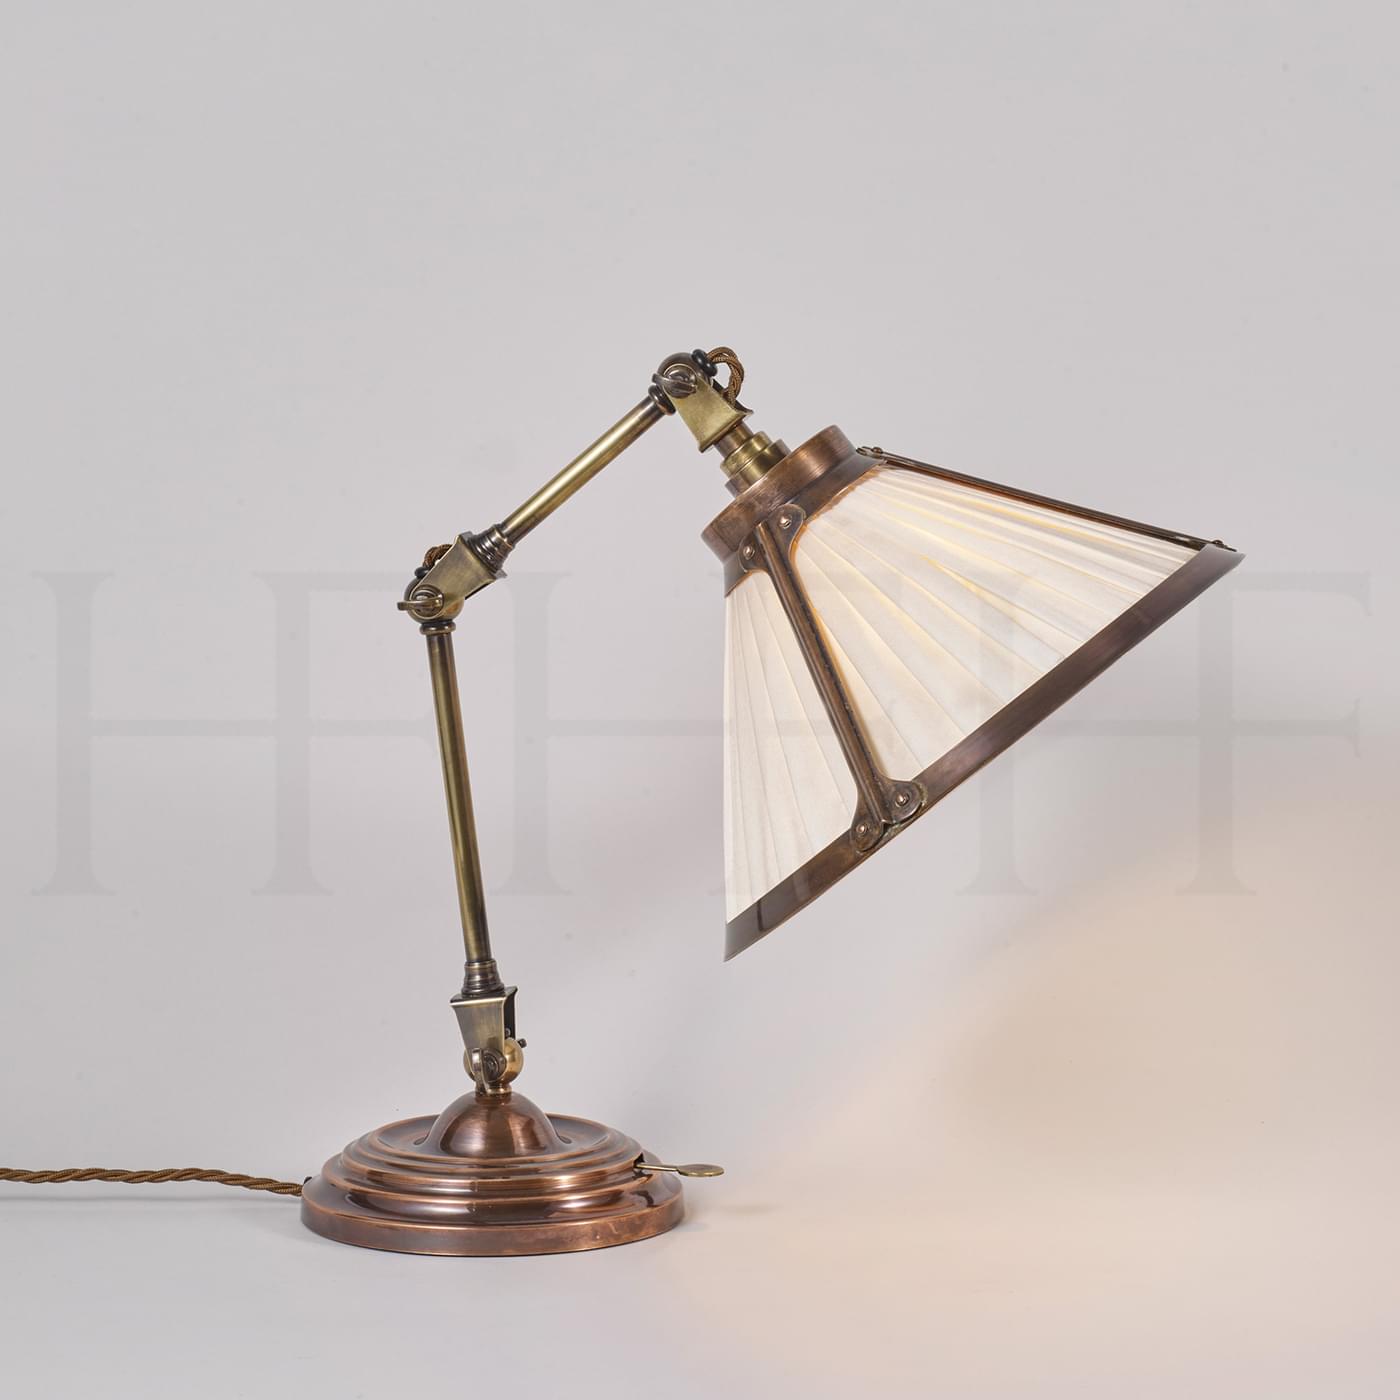 TL 2 Articulated Arm Desk Lamp Antique Brass Antique Copper Porcelain Shade L